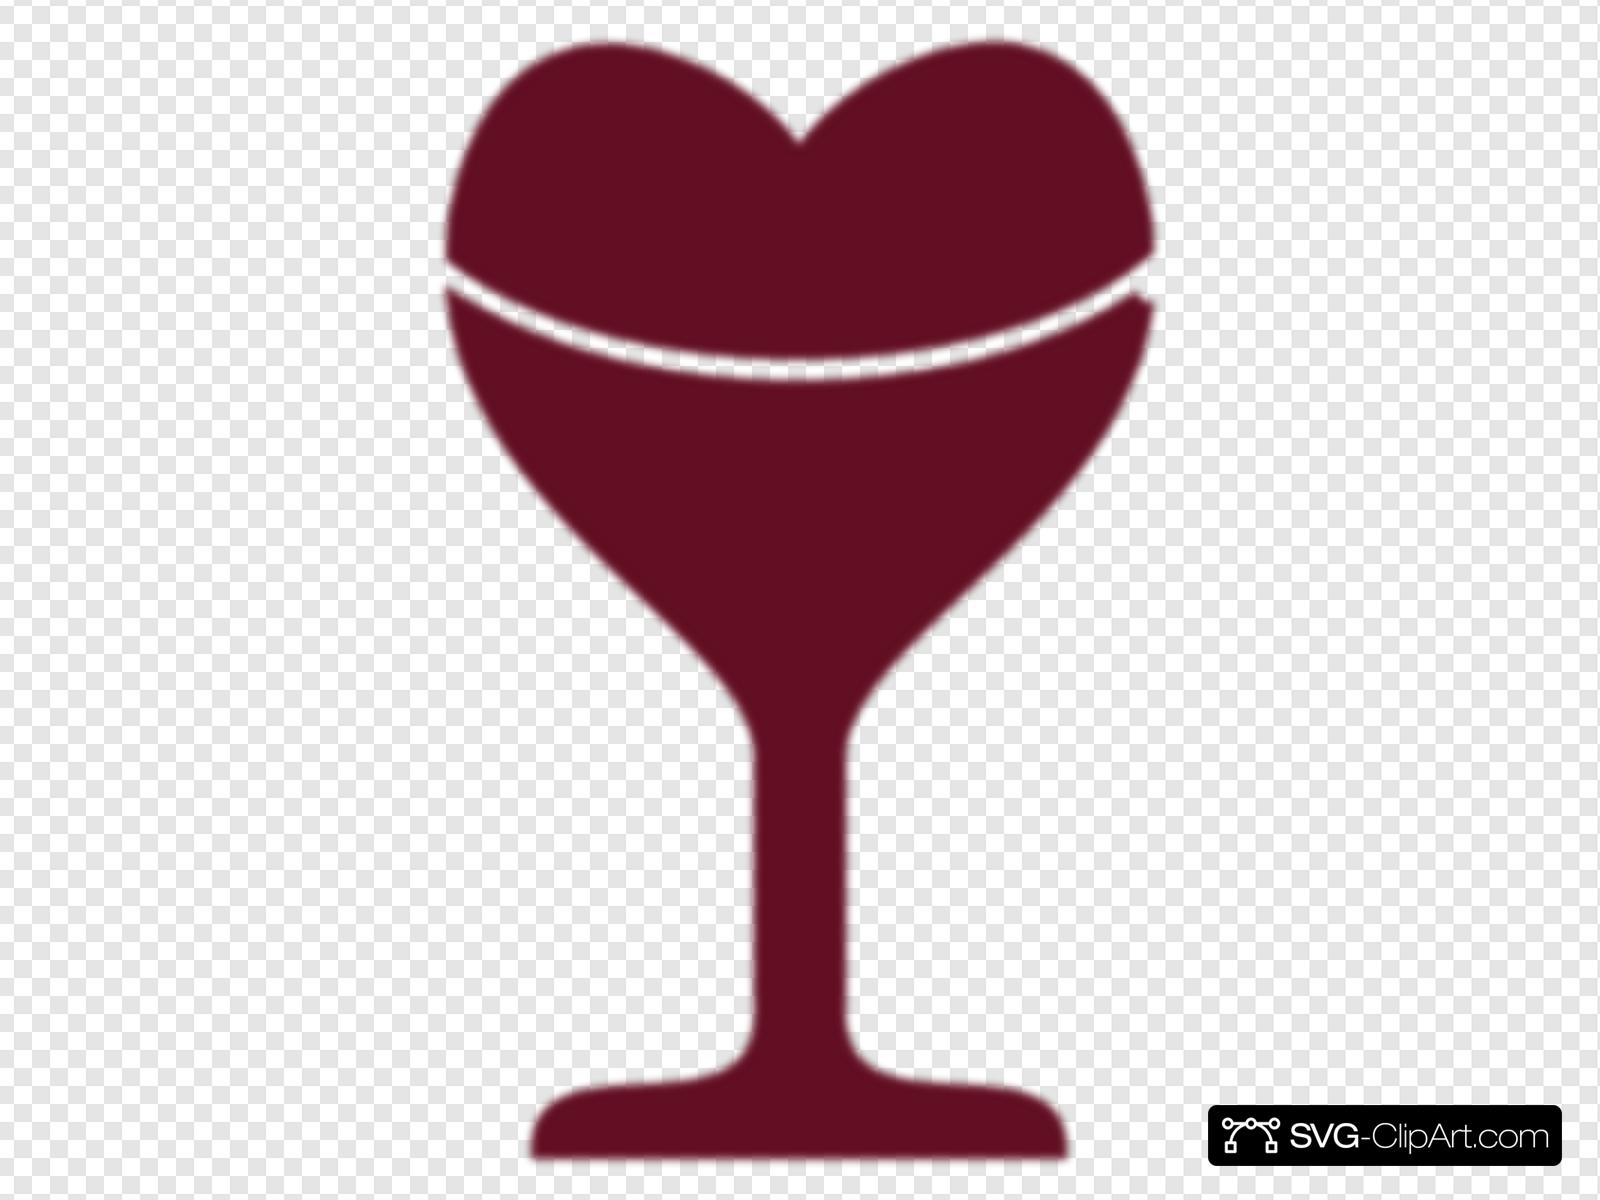 Wine Heart Glass Clip art, Icon and SVG.